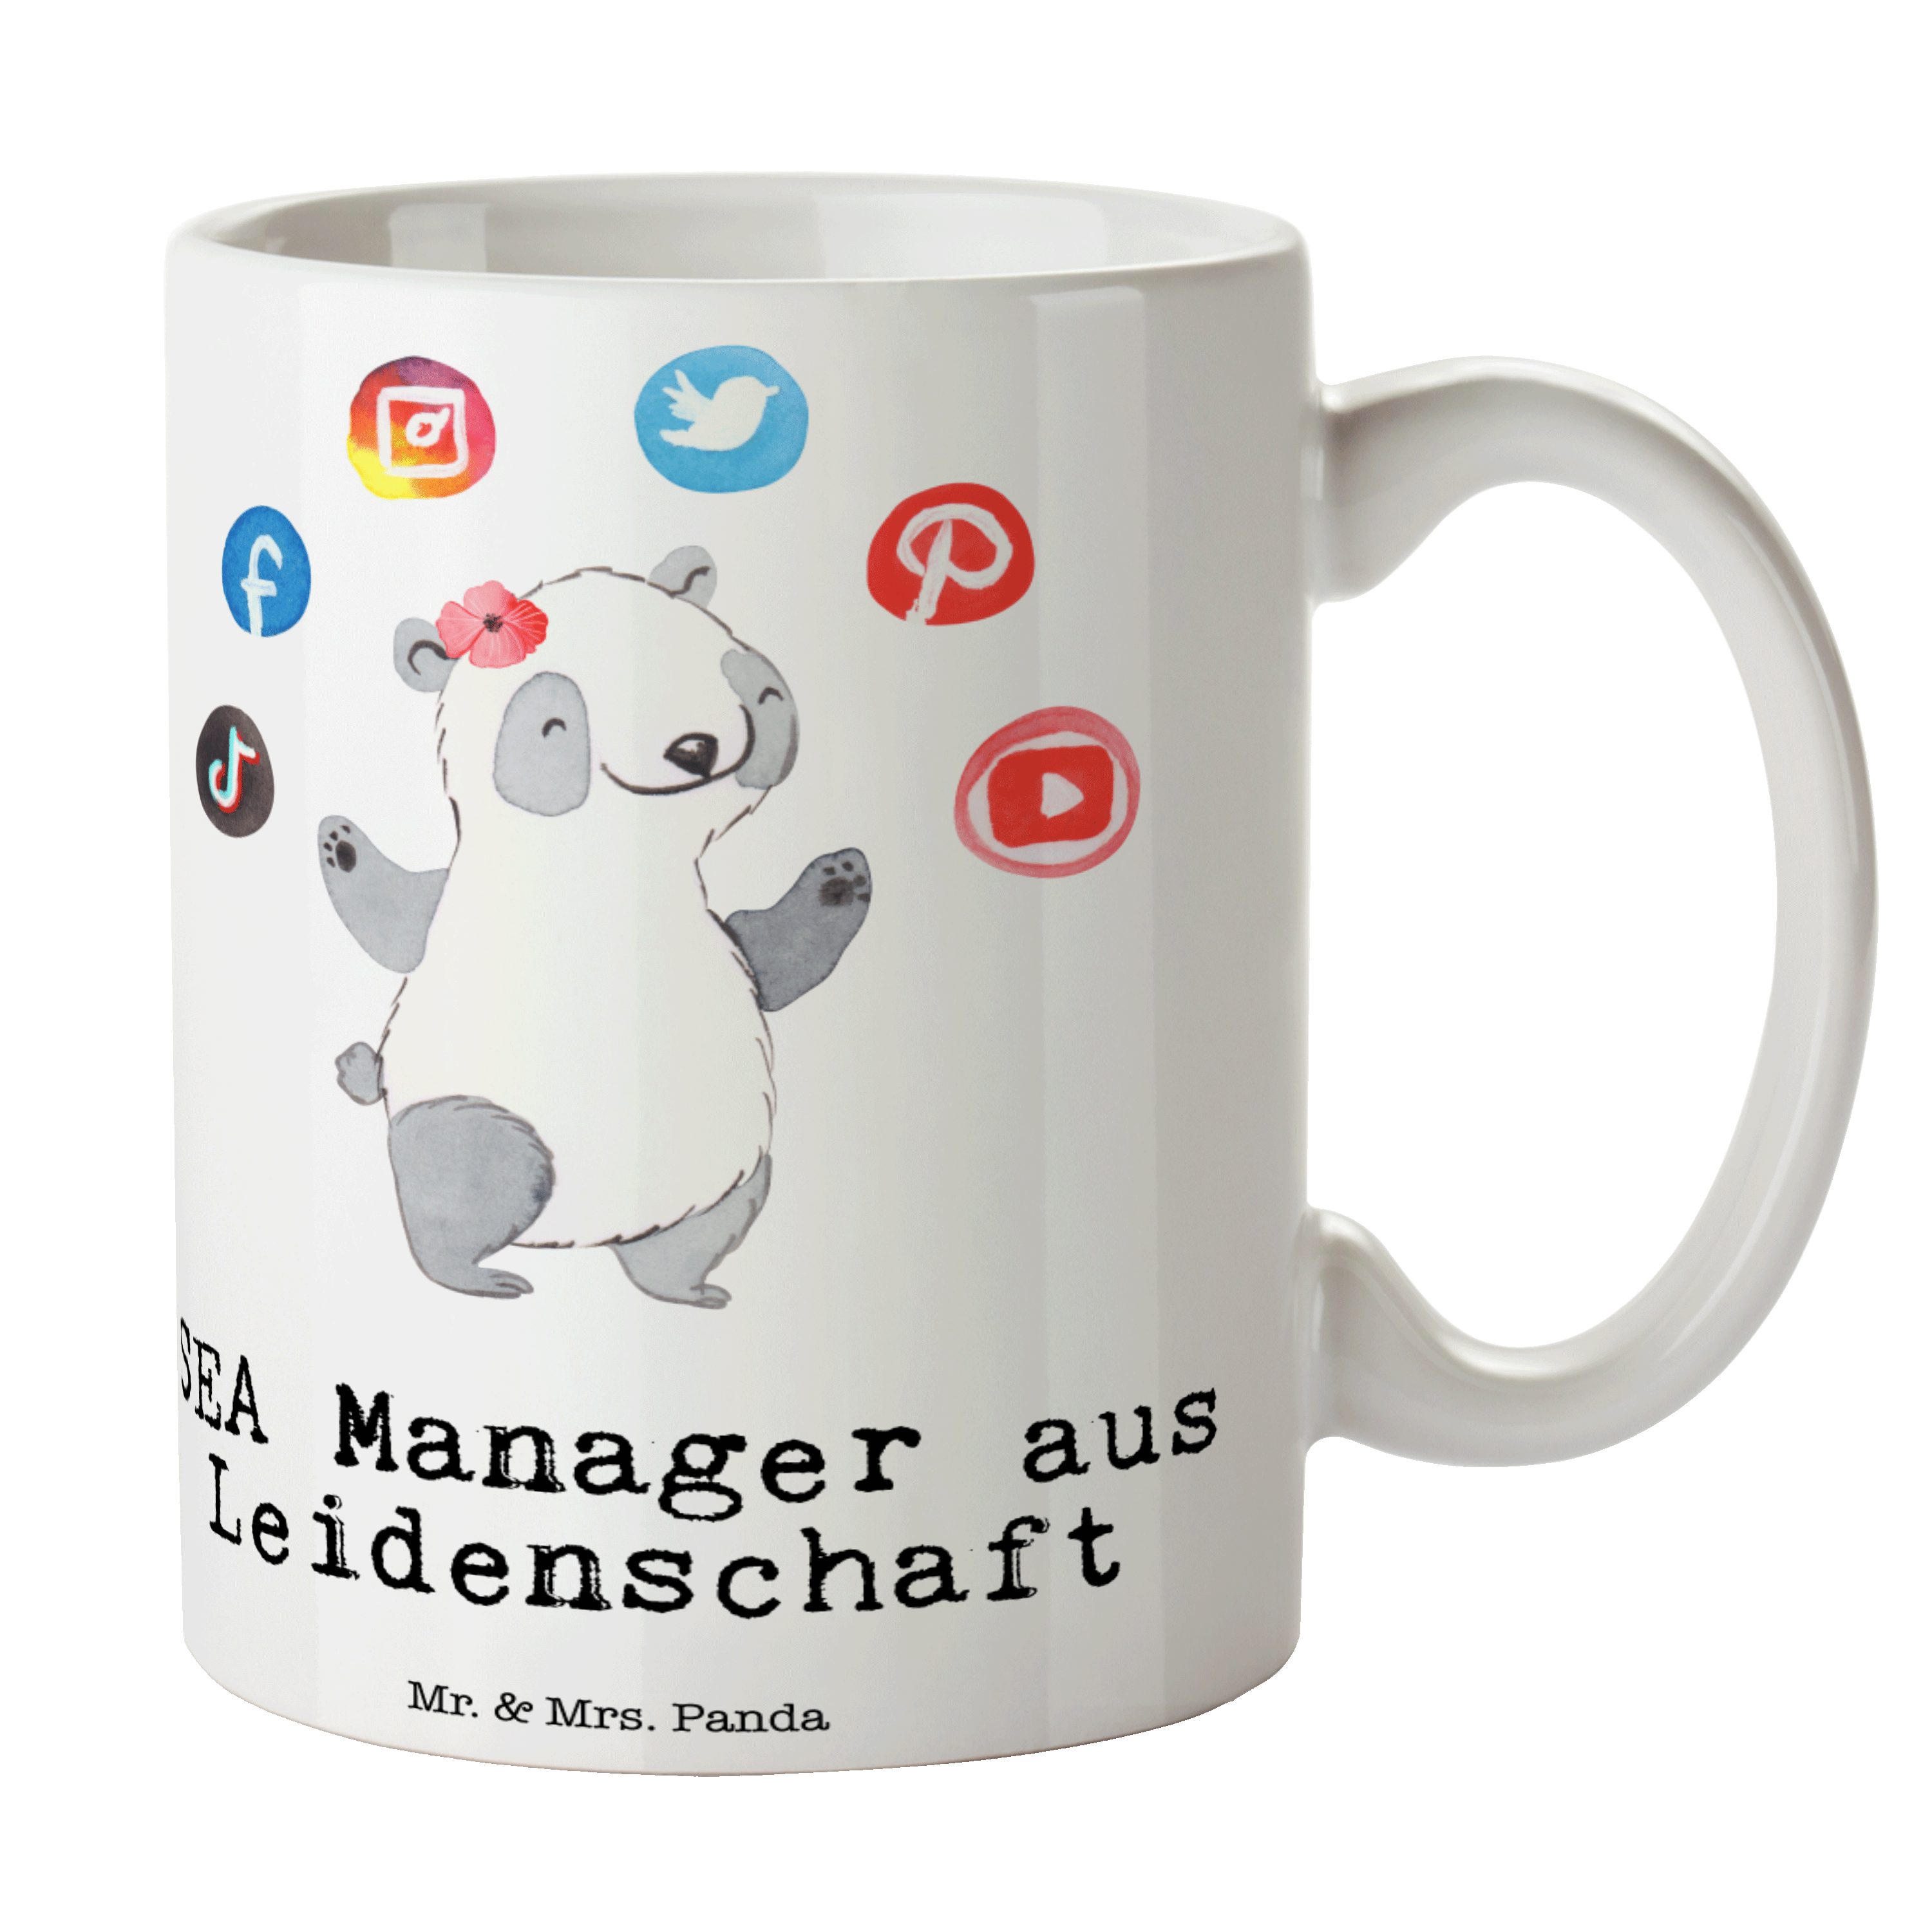 Mr. & Mrs. Panda Tasse SEA Manager aus Leidenschaft - Weiß - Geschenk, Geschenk Tasse, Kaffe, Keramik